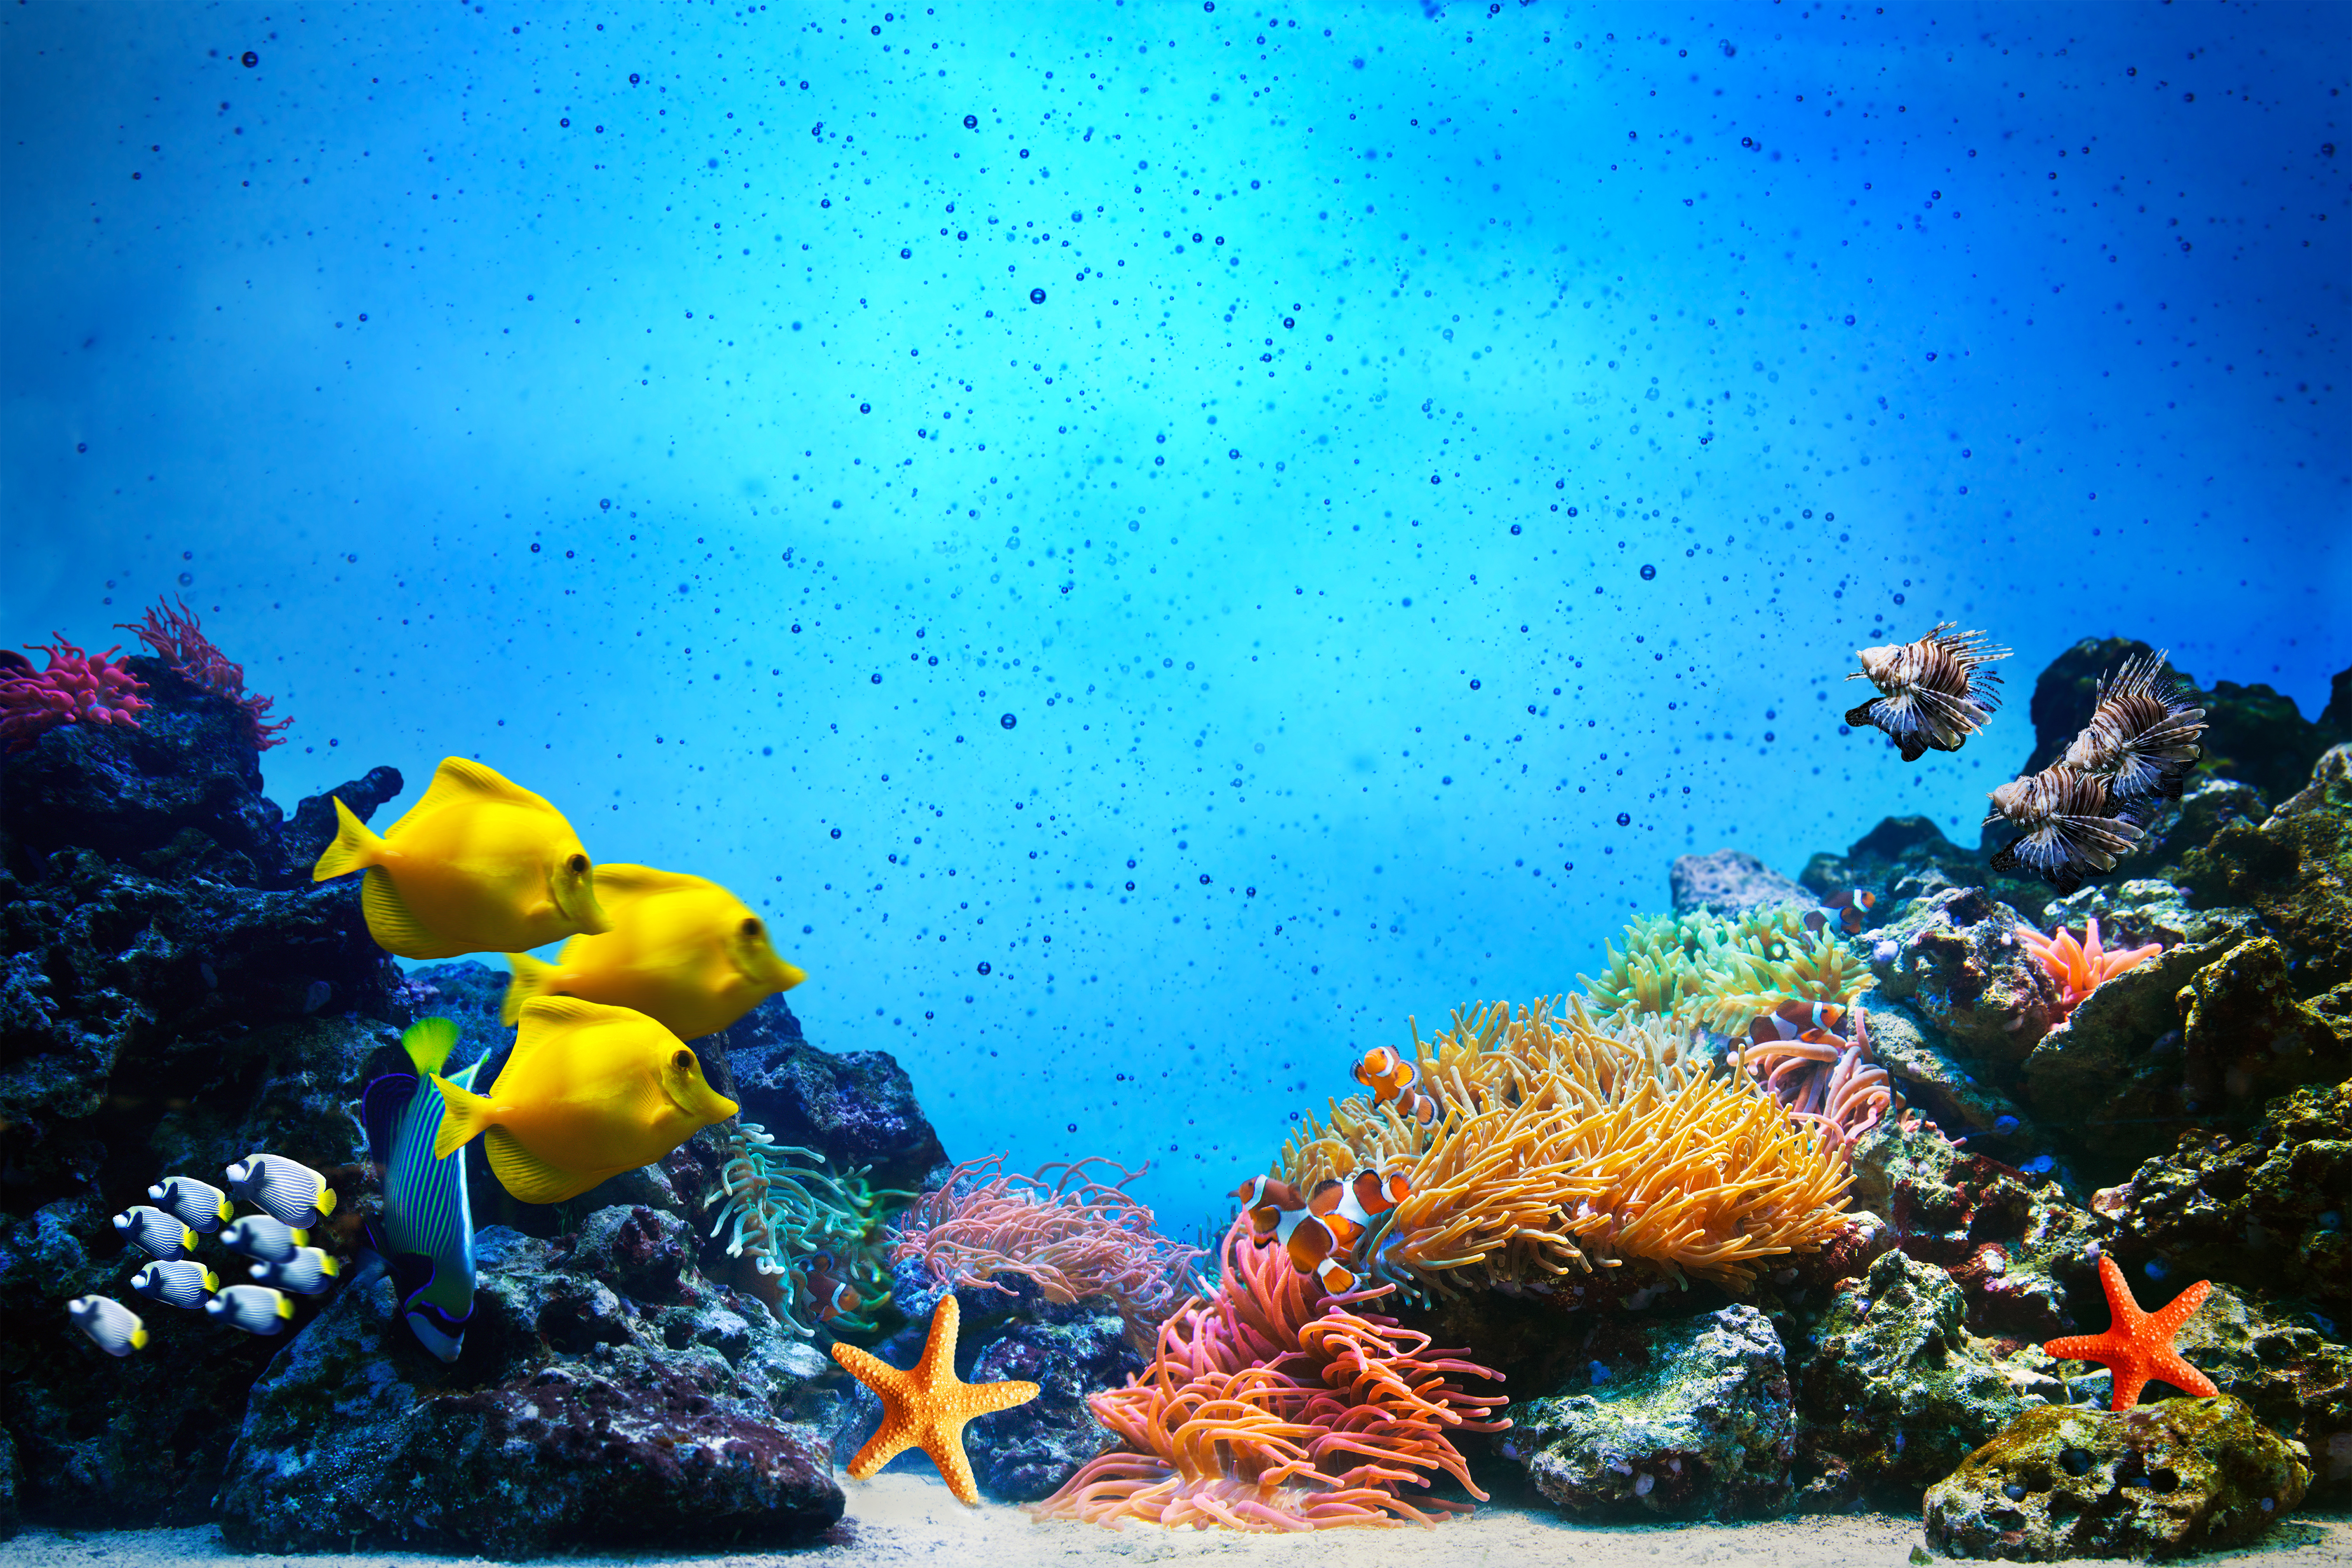 Underwater with Fish Background | Gallery Yopriceville - High ...